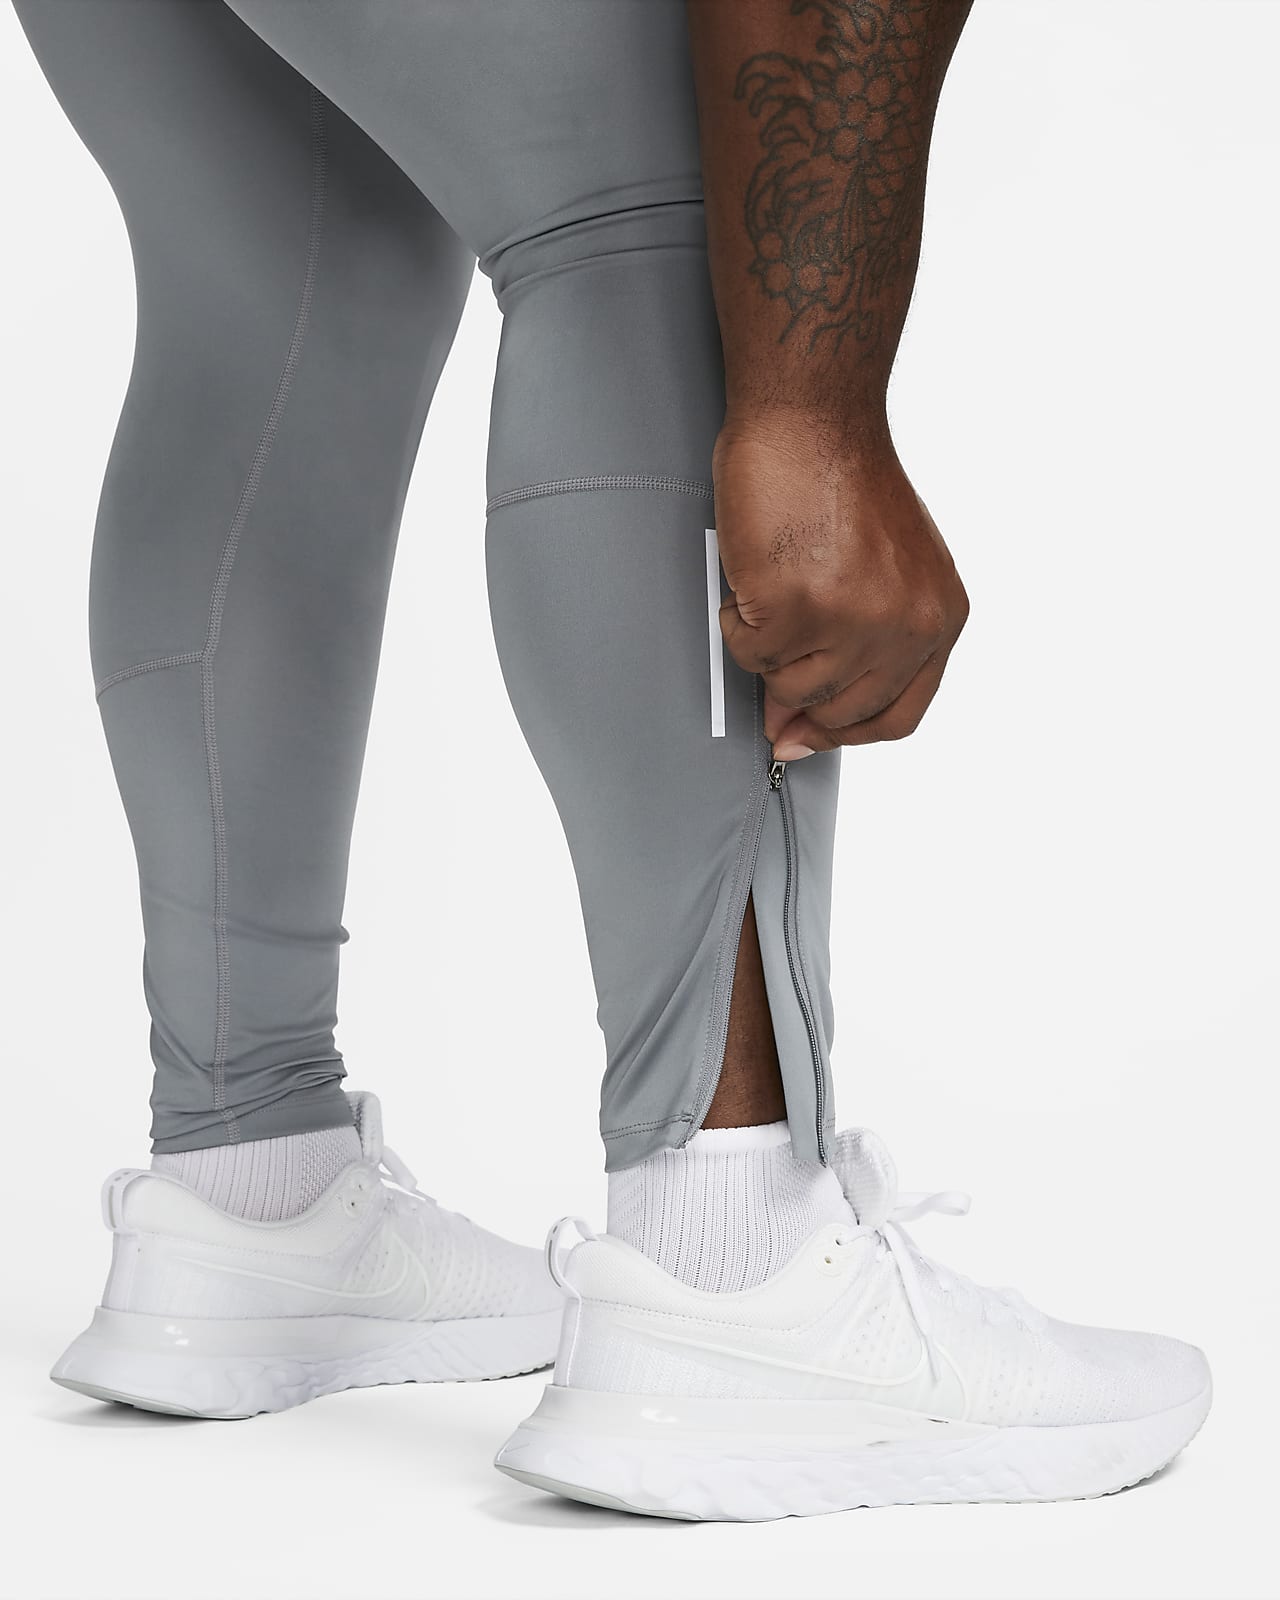 Buy Nike Men's Therma-FIT Repel Challenger Running Pants Grey in Dubai, UAE  -SSS